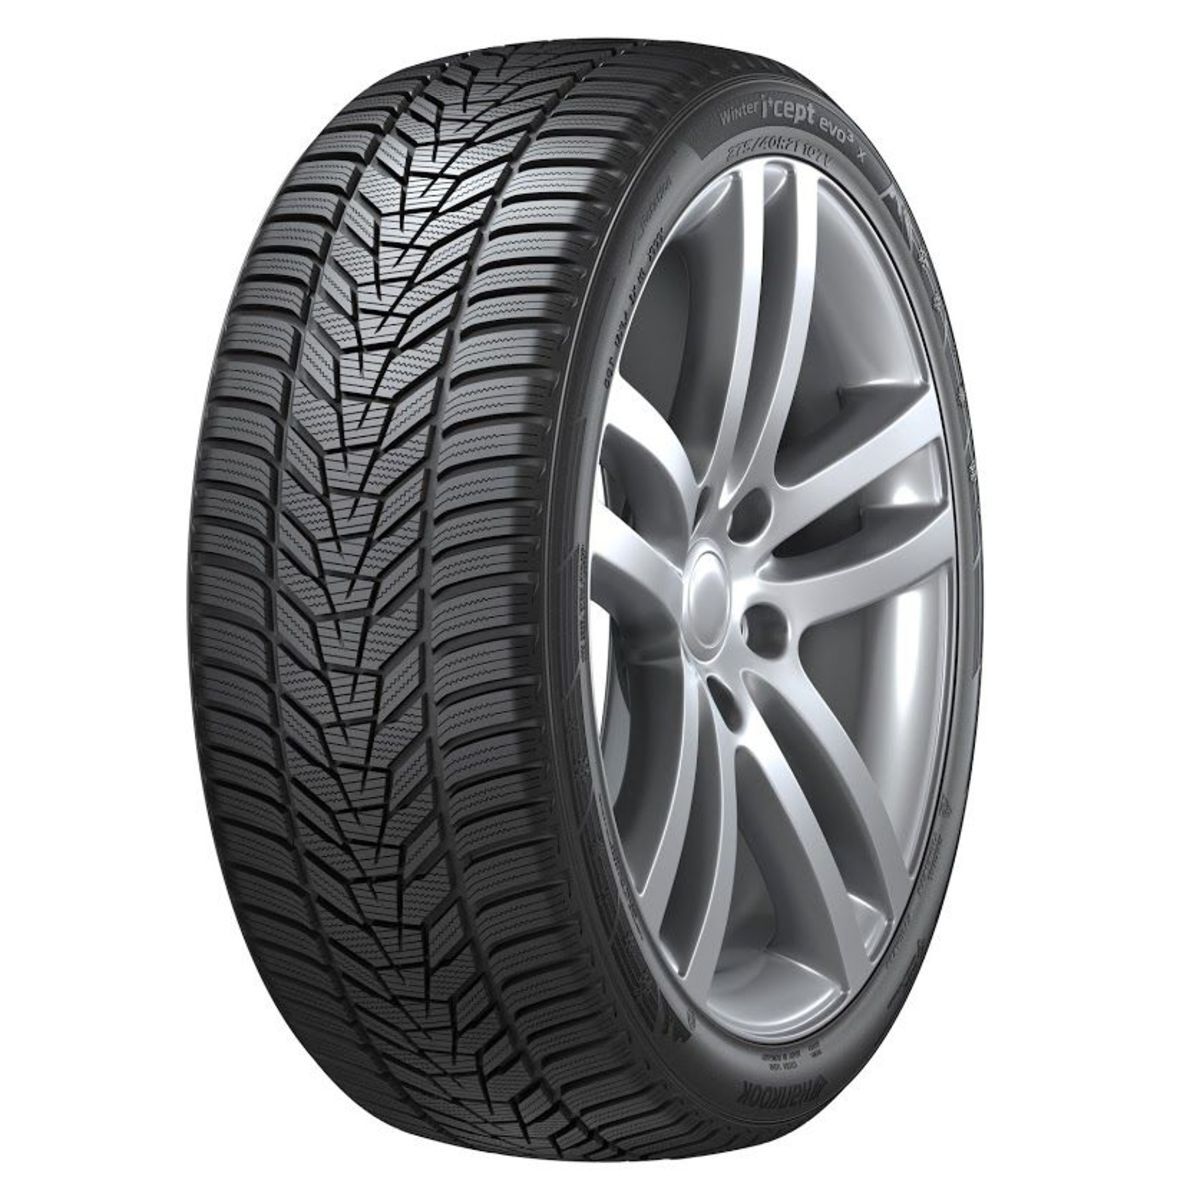 Neumáticos de invierno HANKOOK Winter i*cept evo3 X W330A 225/65R17 XL 106H